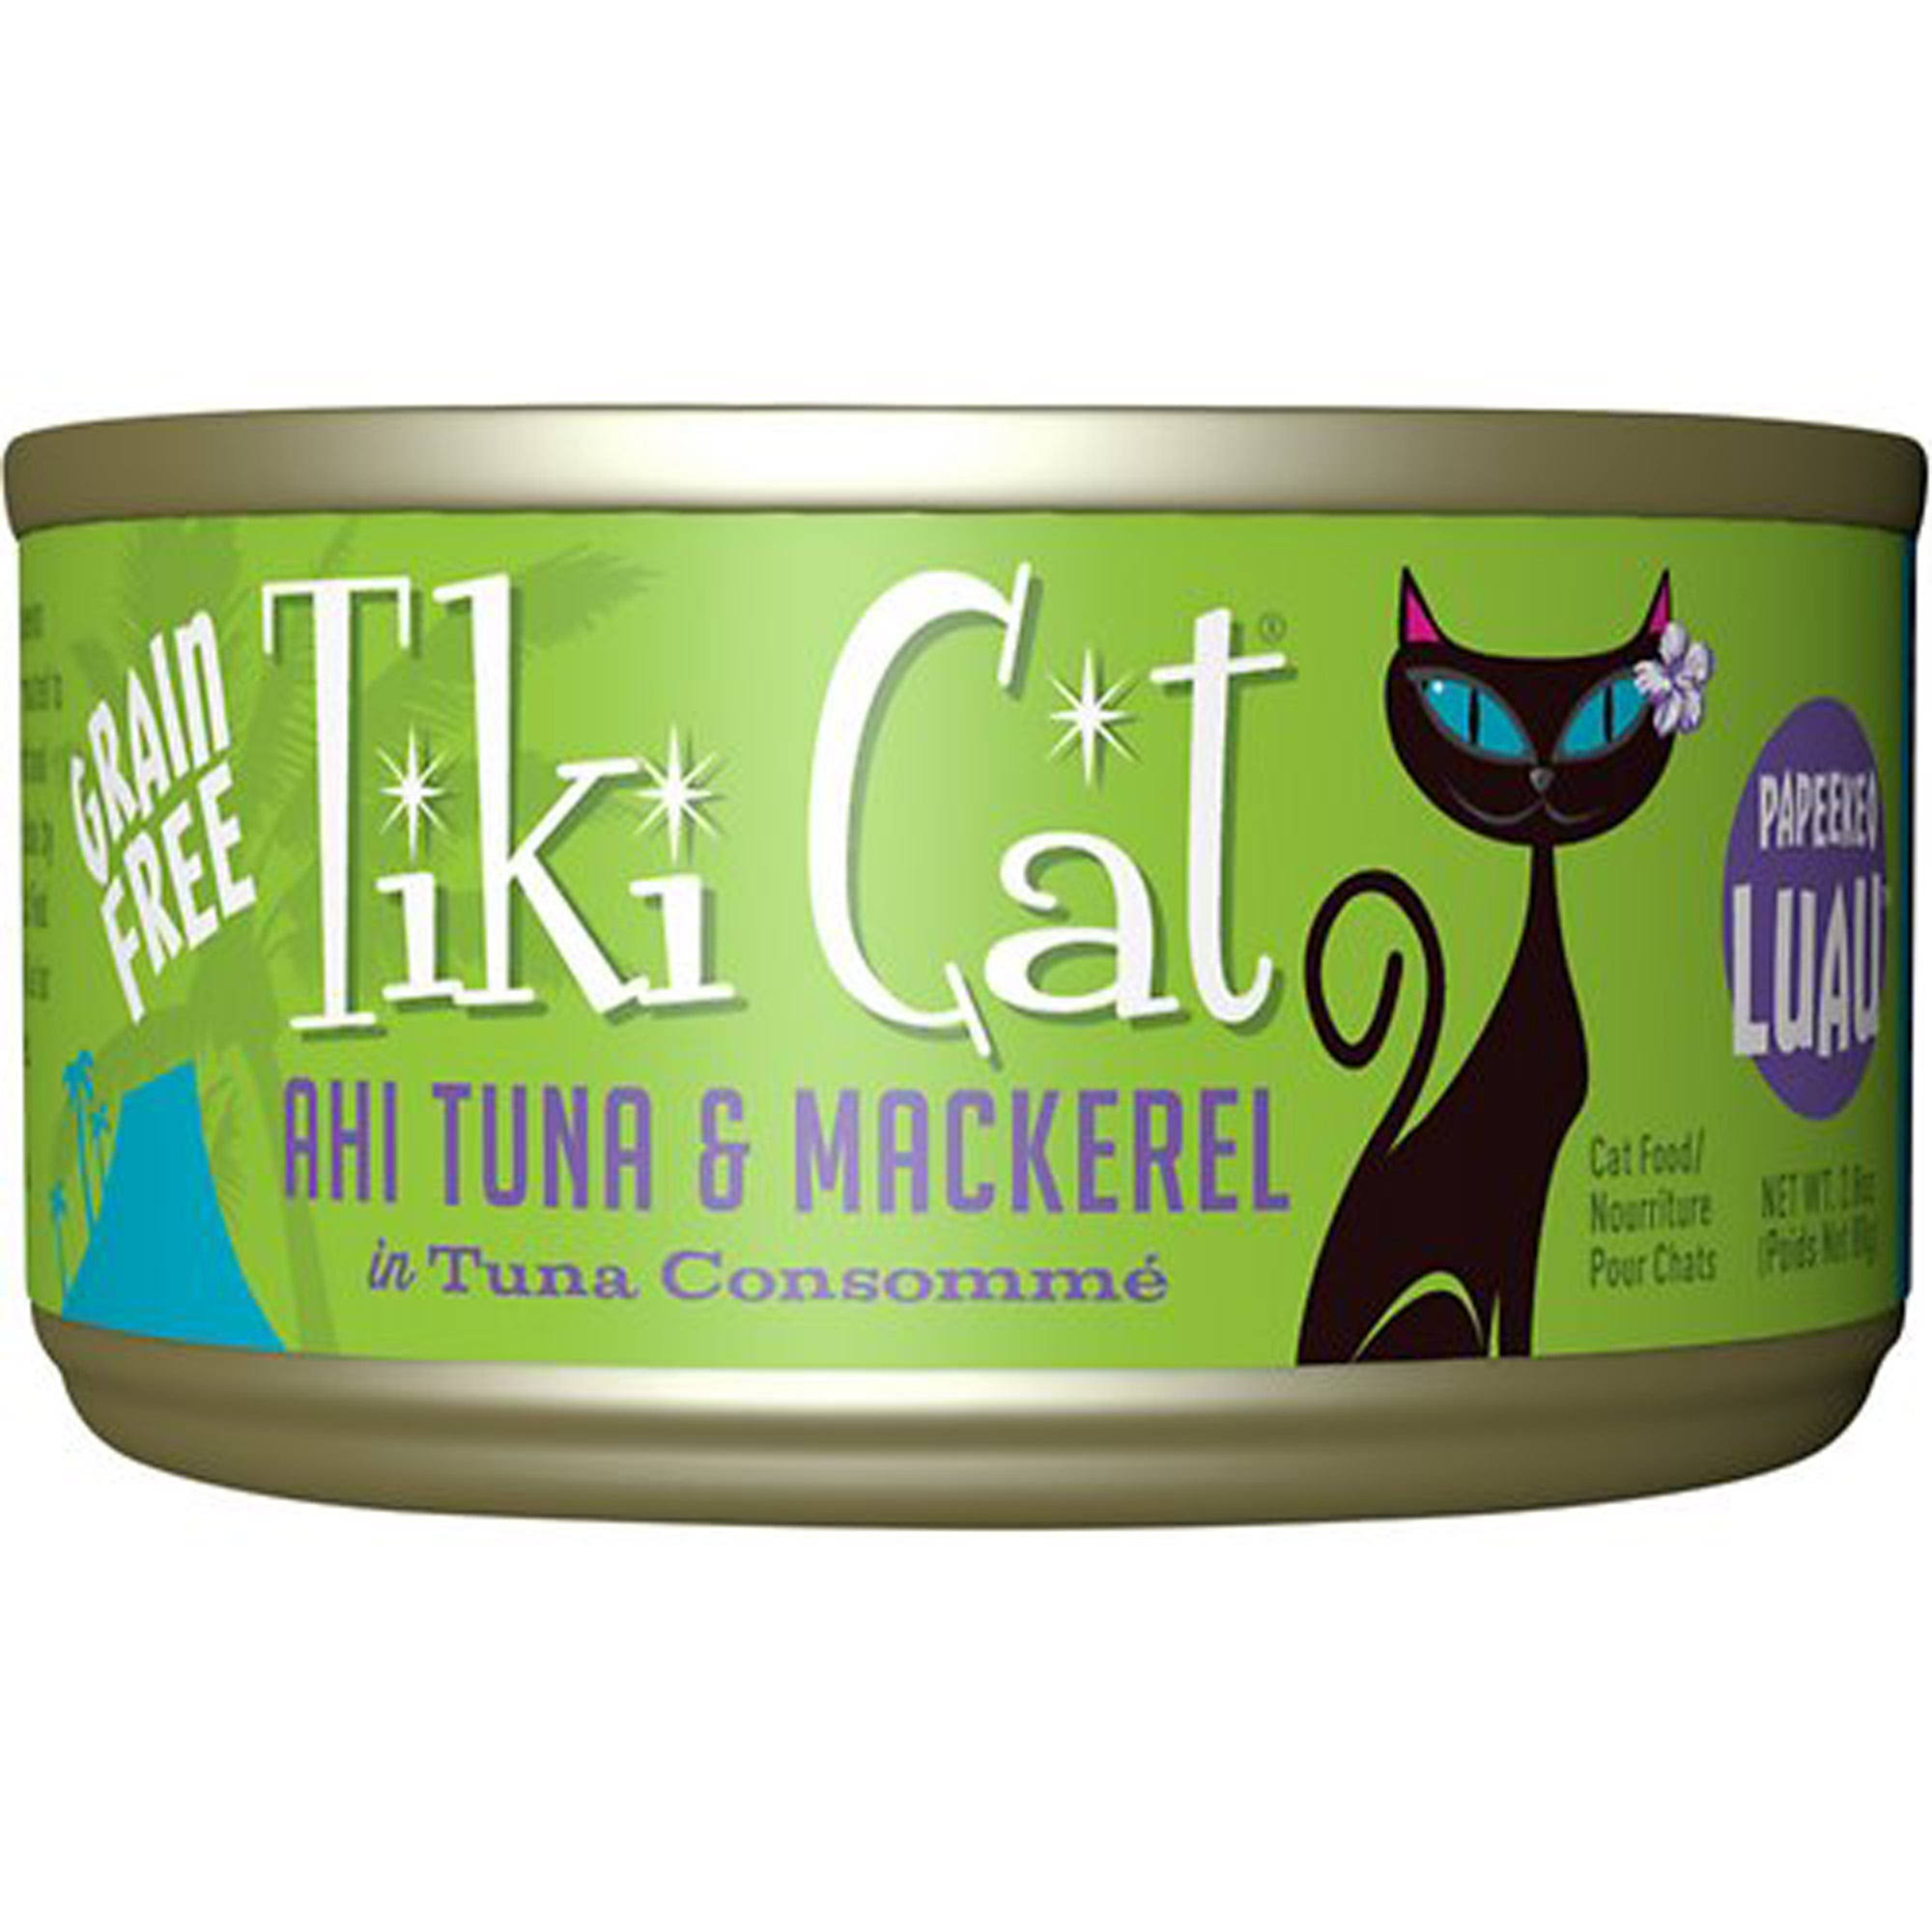 Tiki Cat Papeekeo Luau Ahi Tuna & Mackerel Cat Food | 2.8 oz